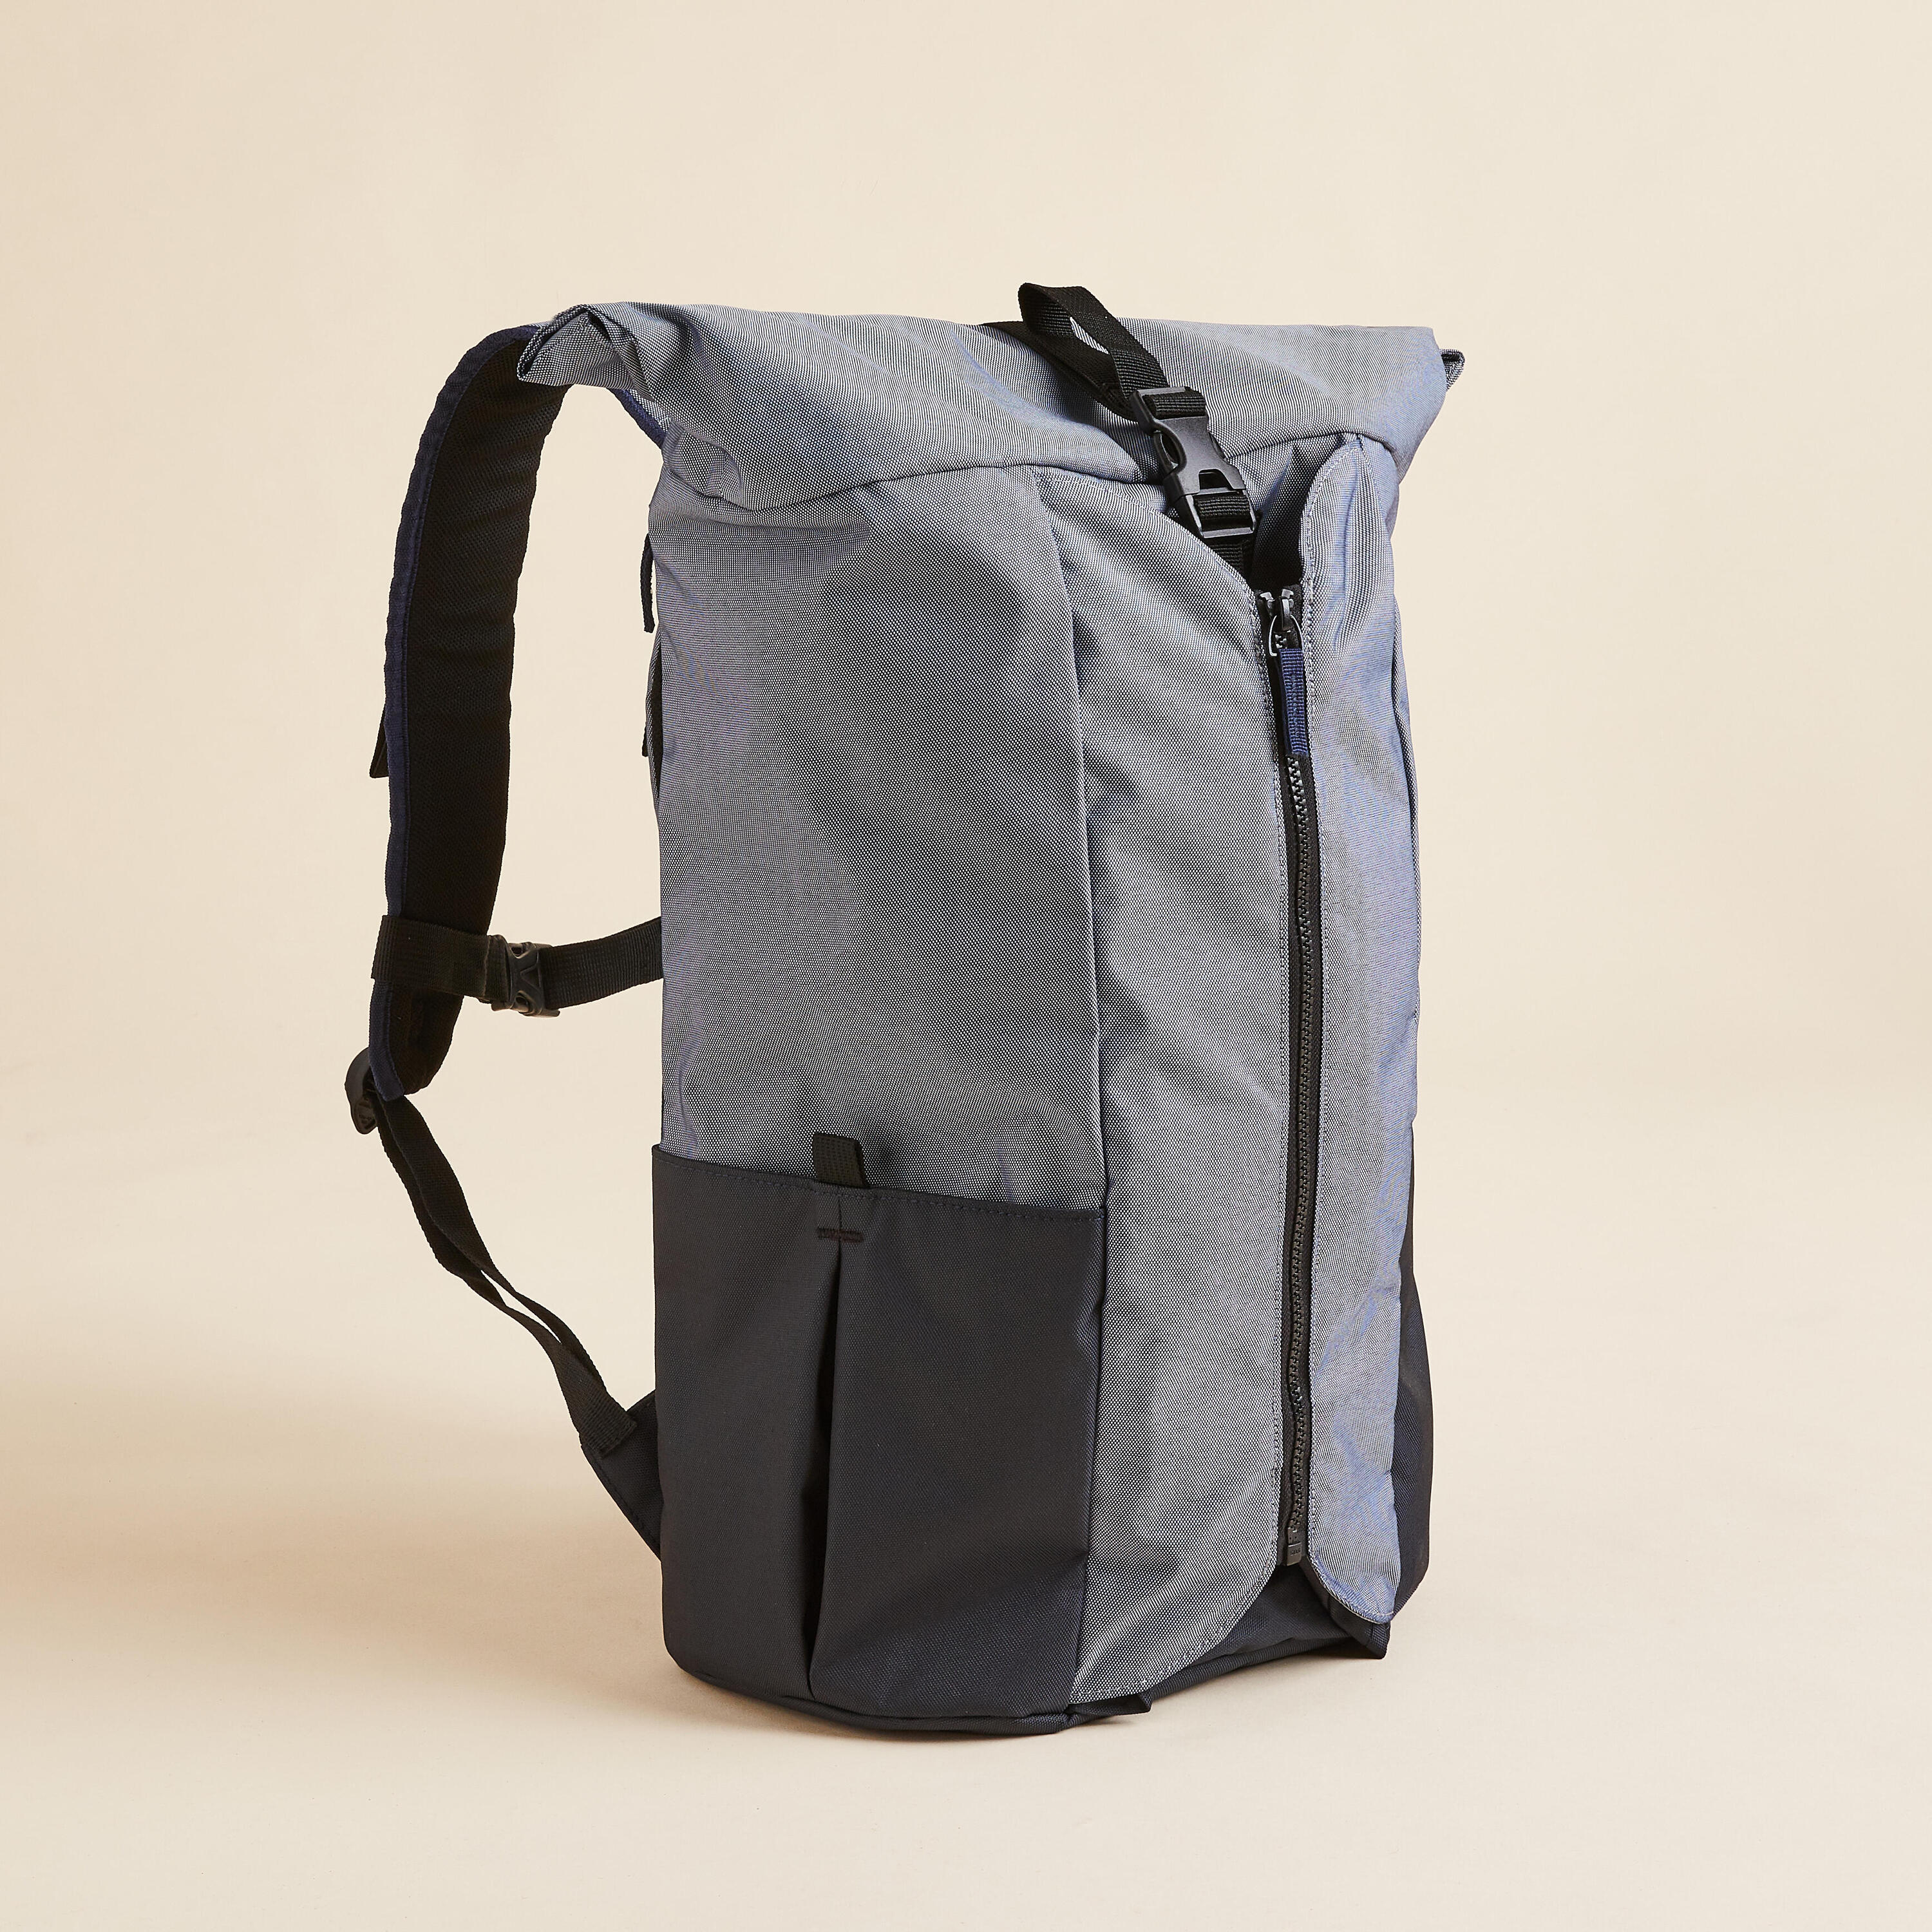 Yoga Mat Backpack - Blue/Grey 1/14